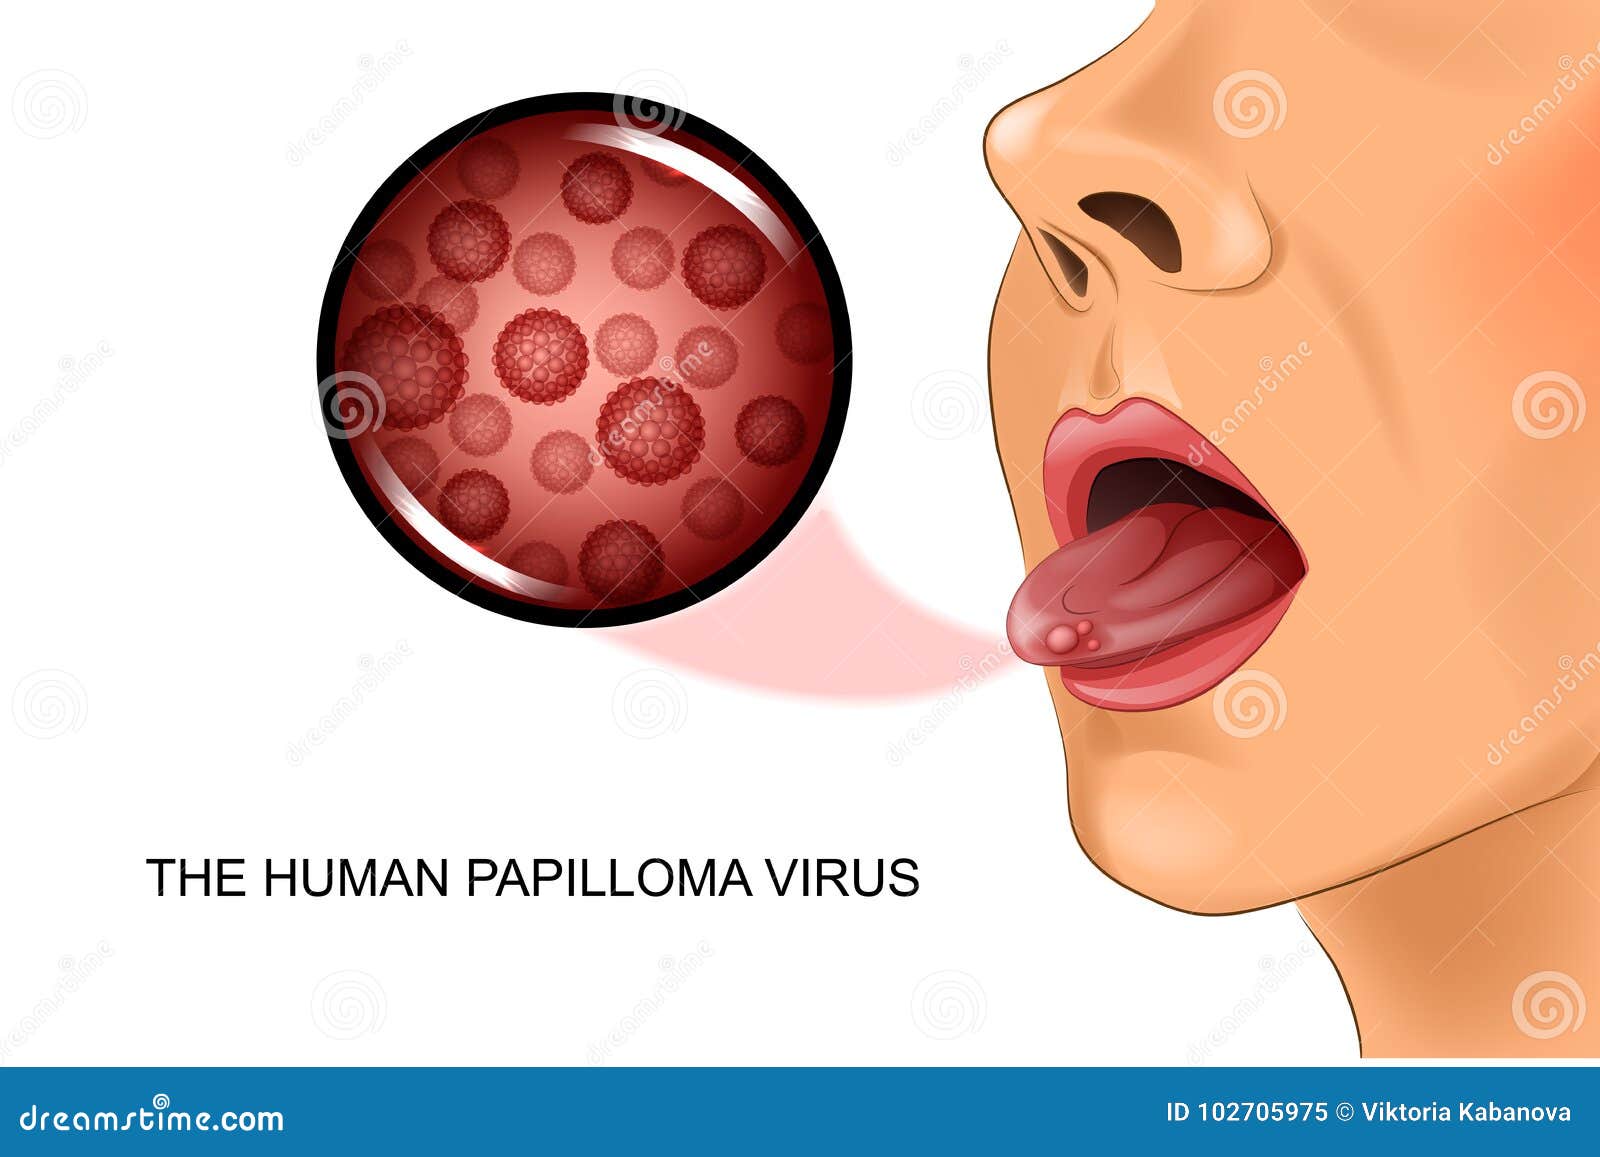 papillomavirus humain langue